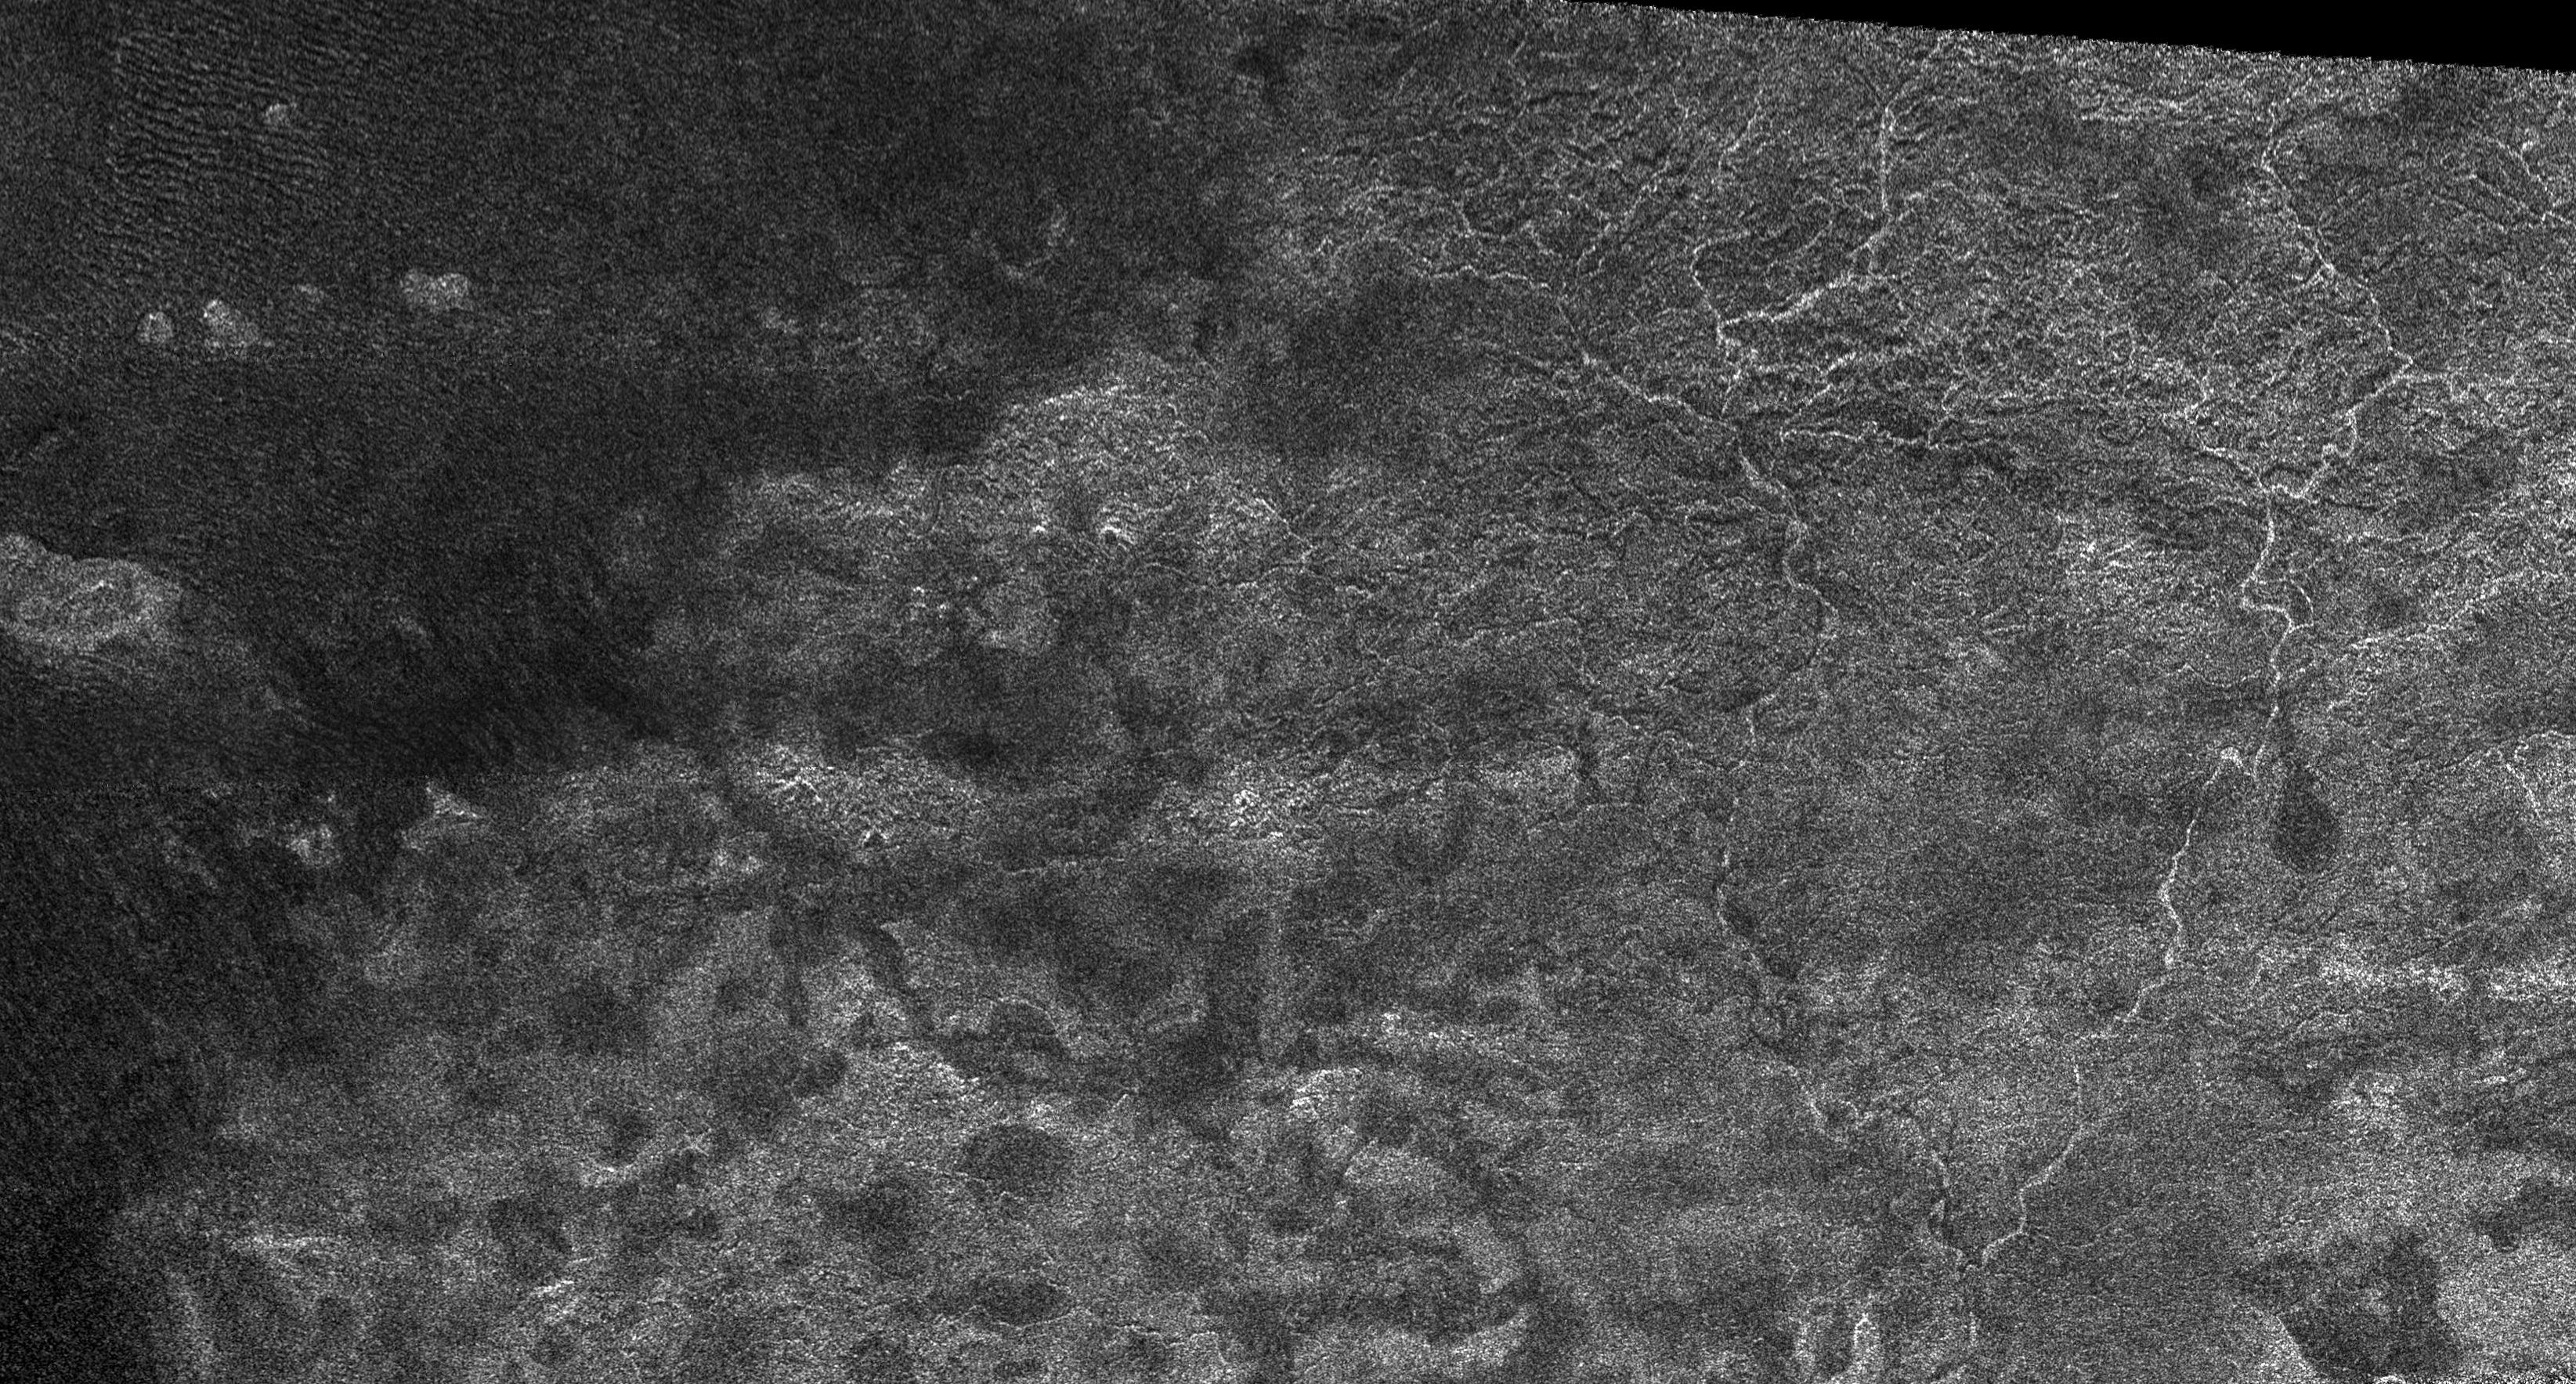 This image shows the radar-bright western margin of Xanadu